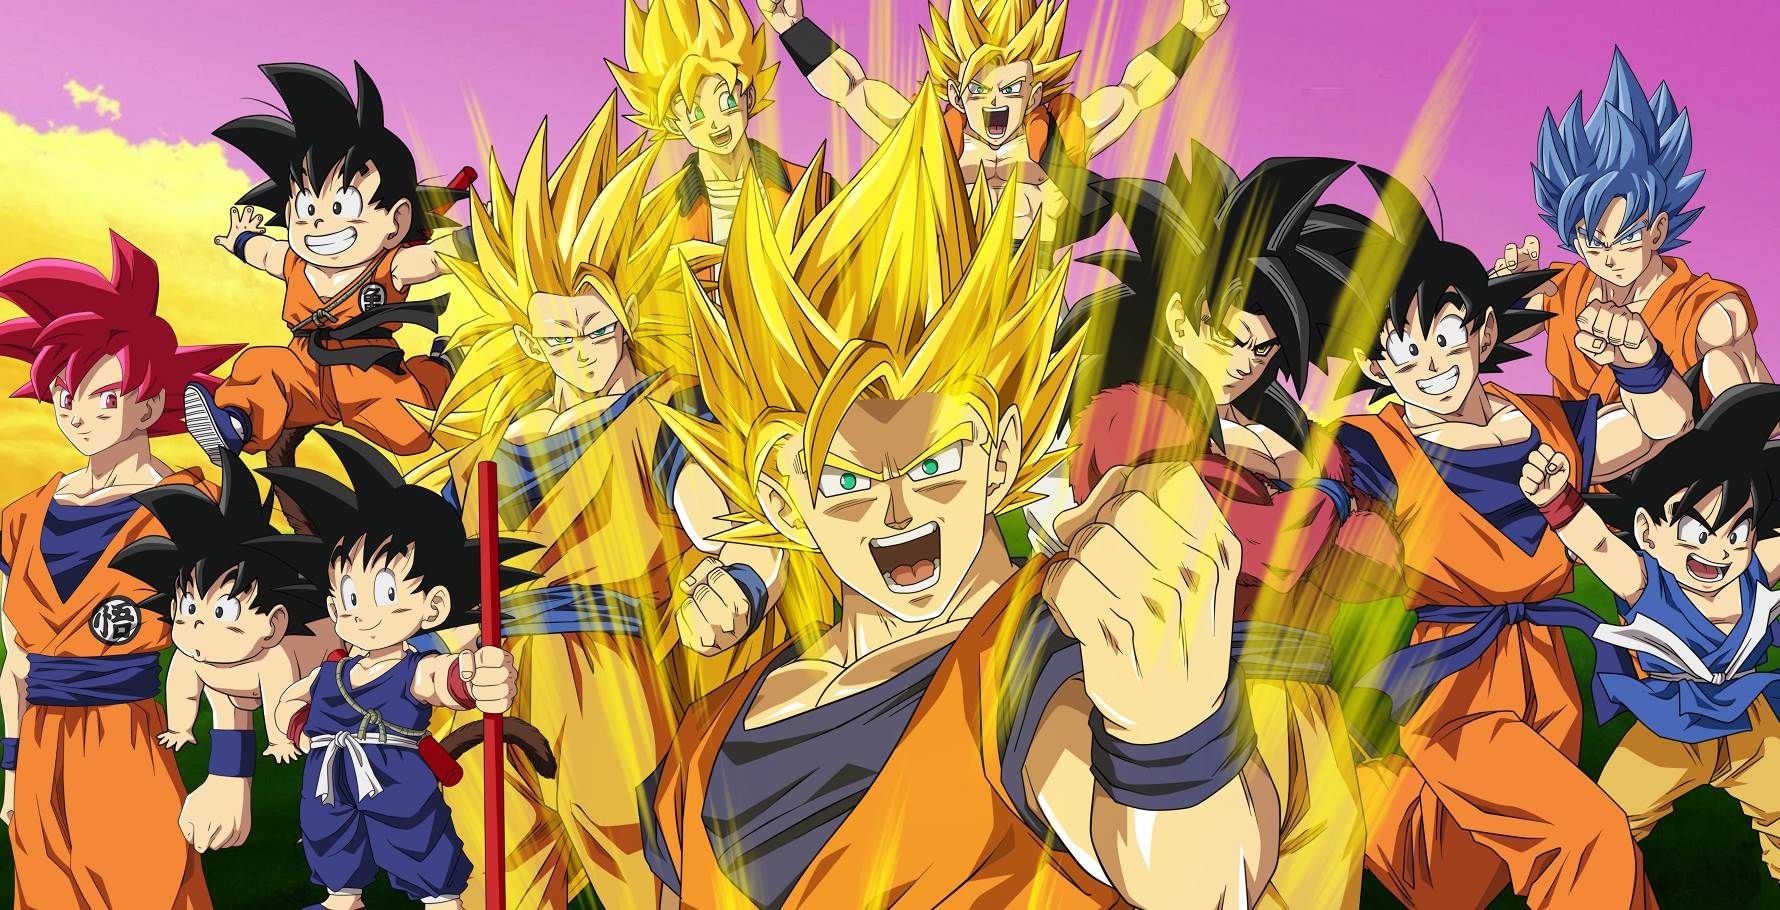 Goku Super Saiyan LIMITED ED. posters & prints by Markus Utas